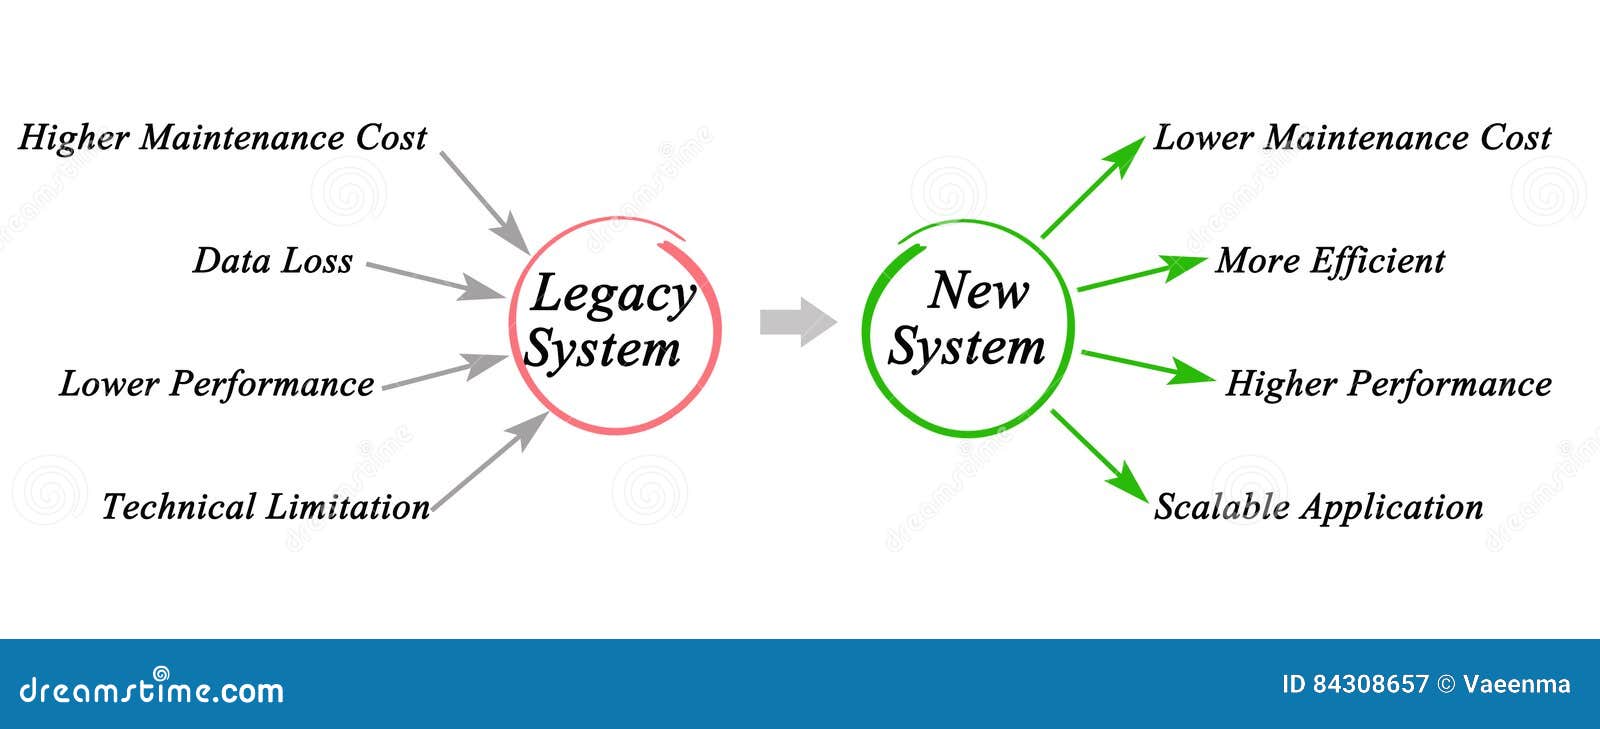 legacy system